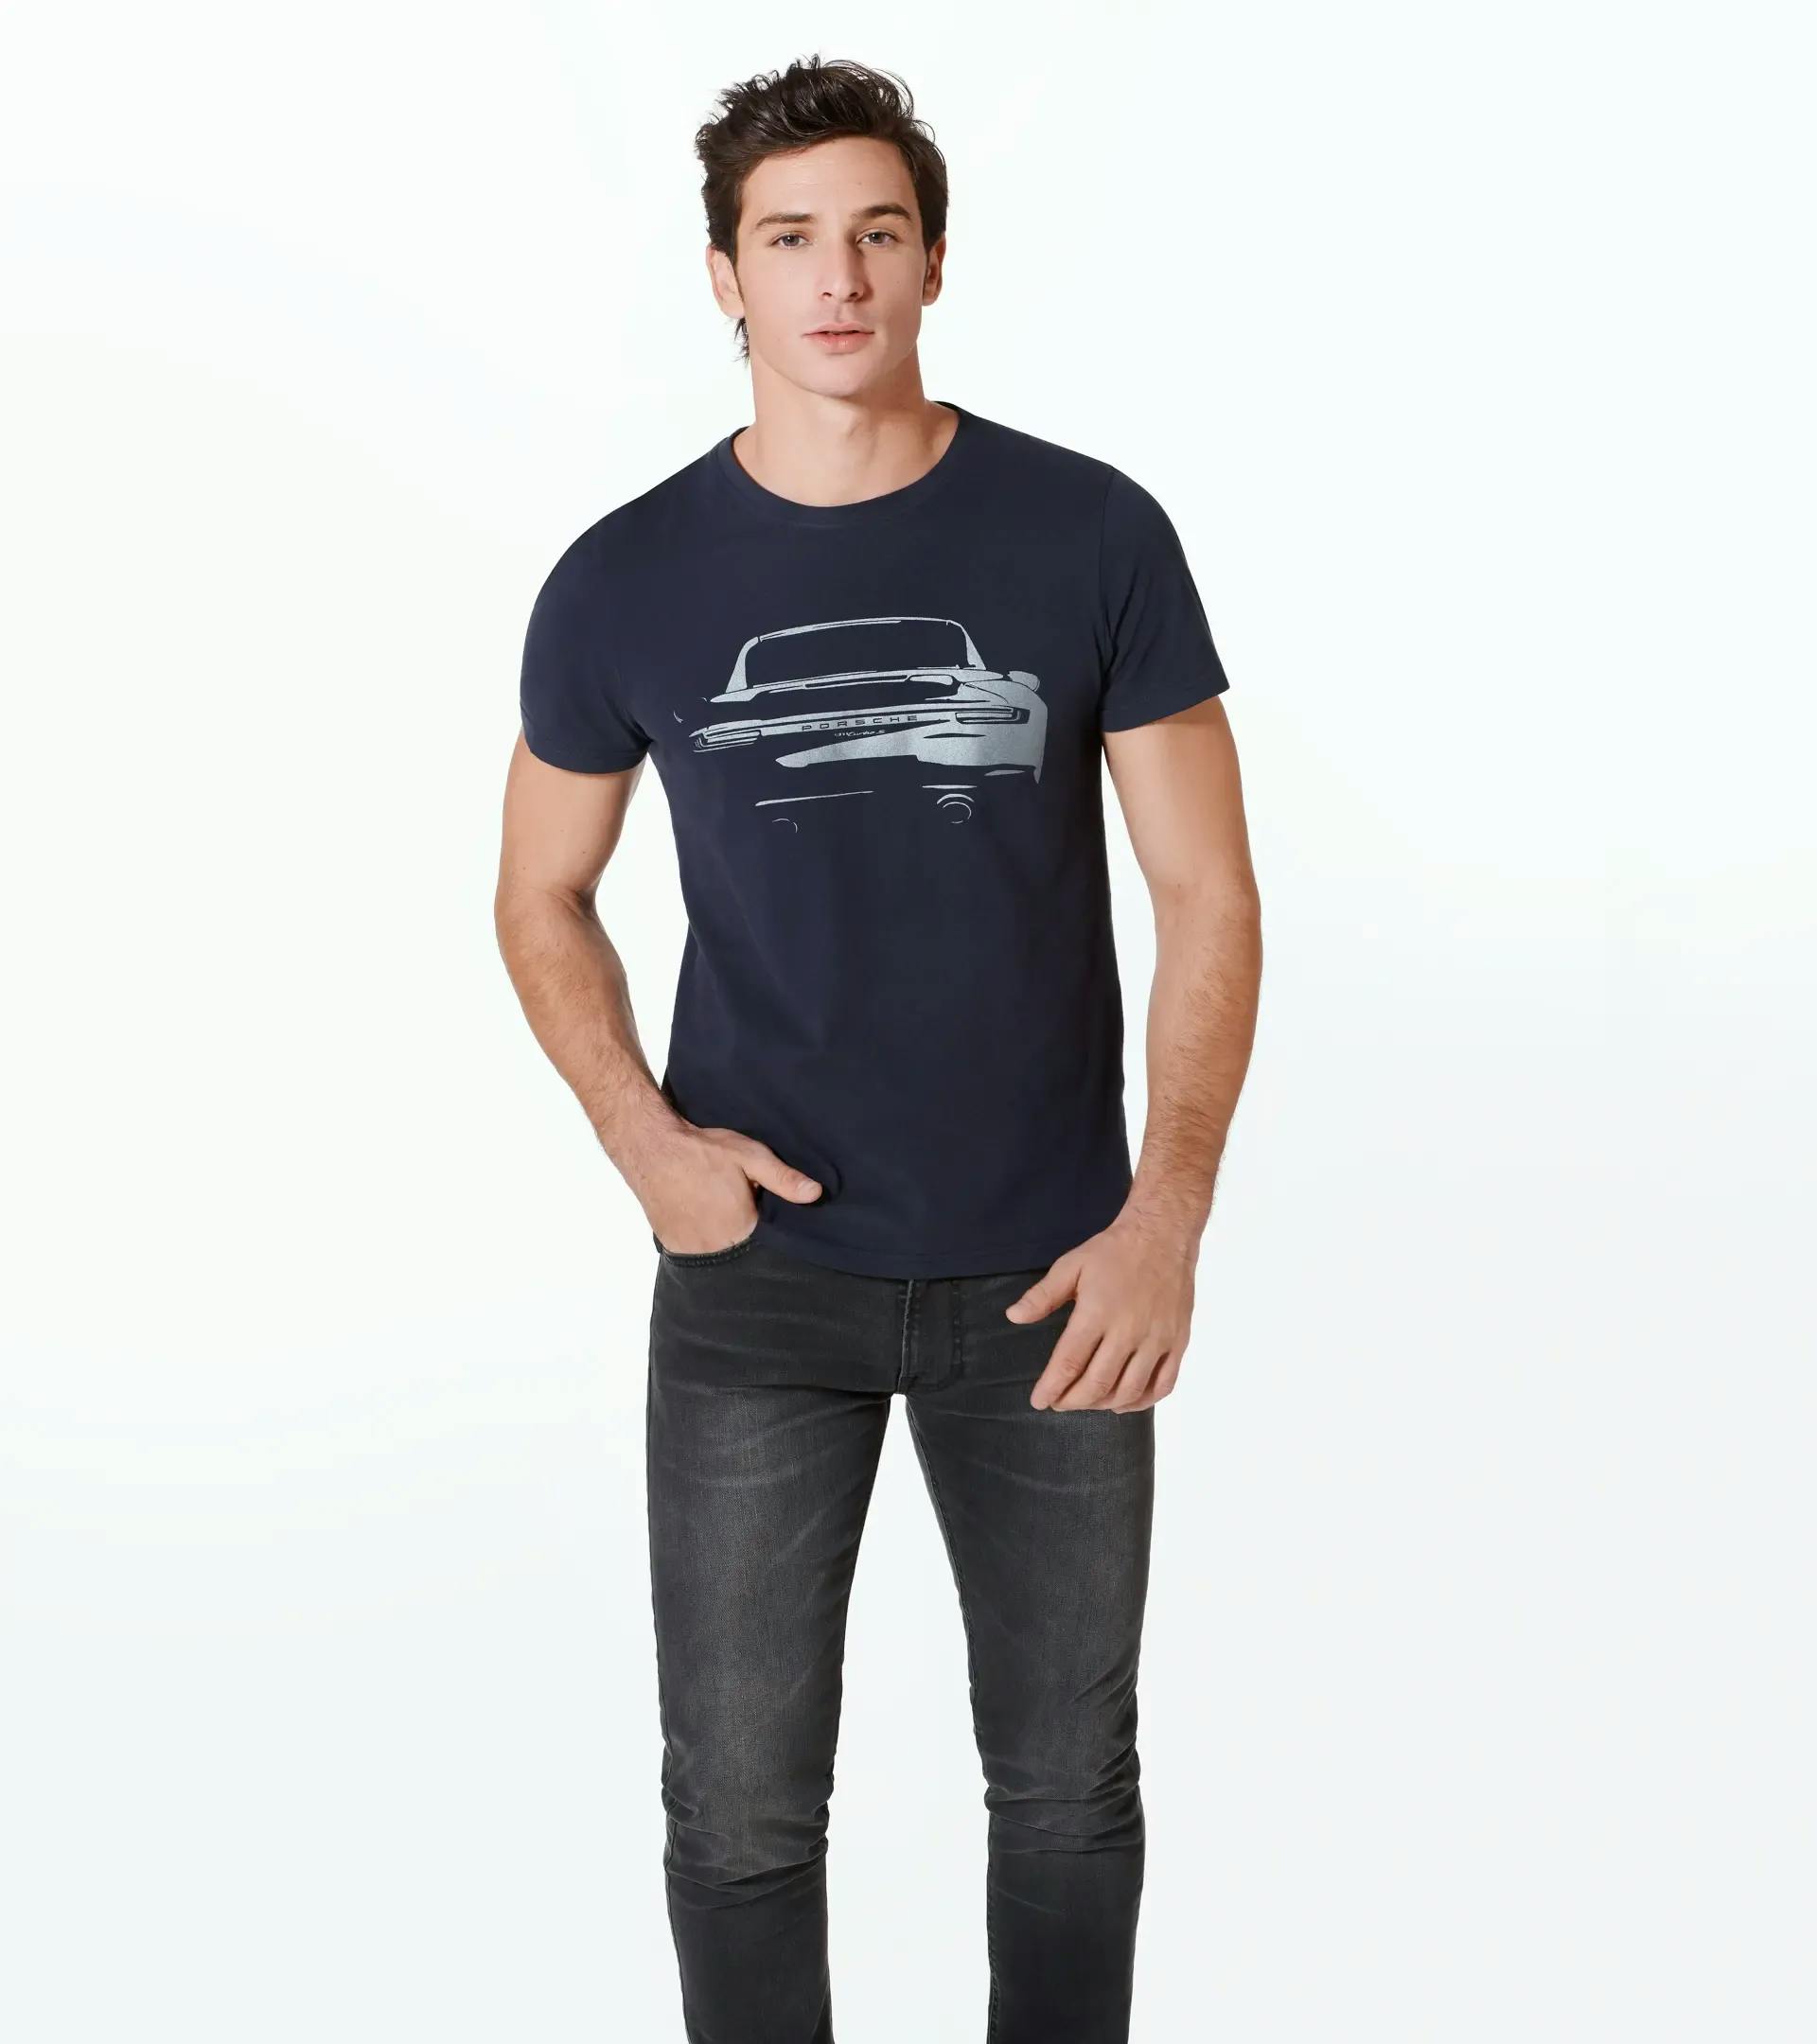 Collector's T-Shirt No. 17 unisex – 911 Turbo – Ltd. 5